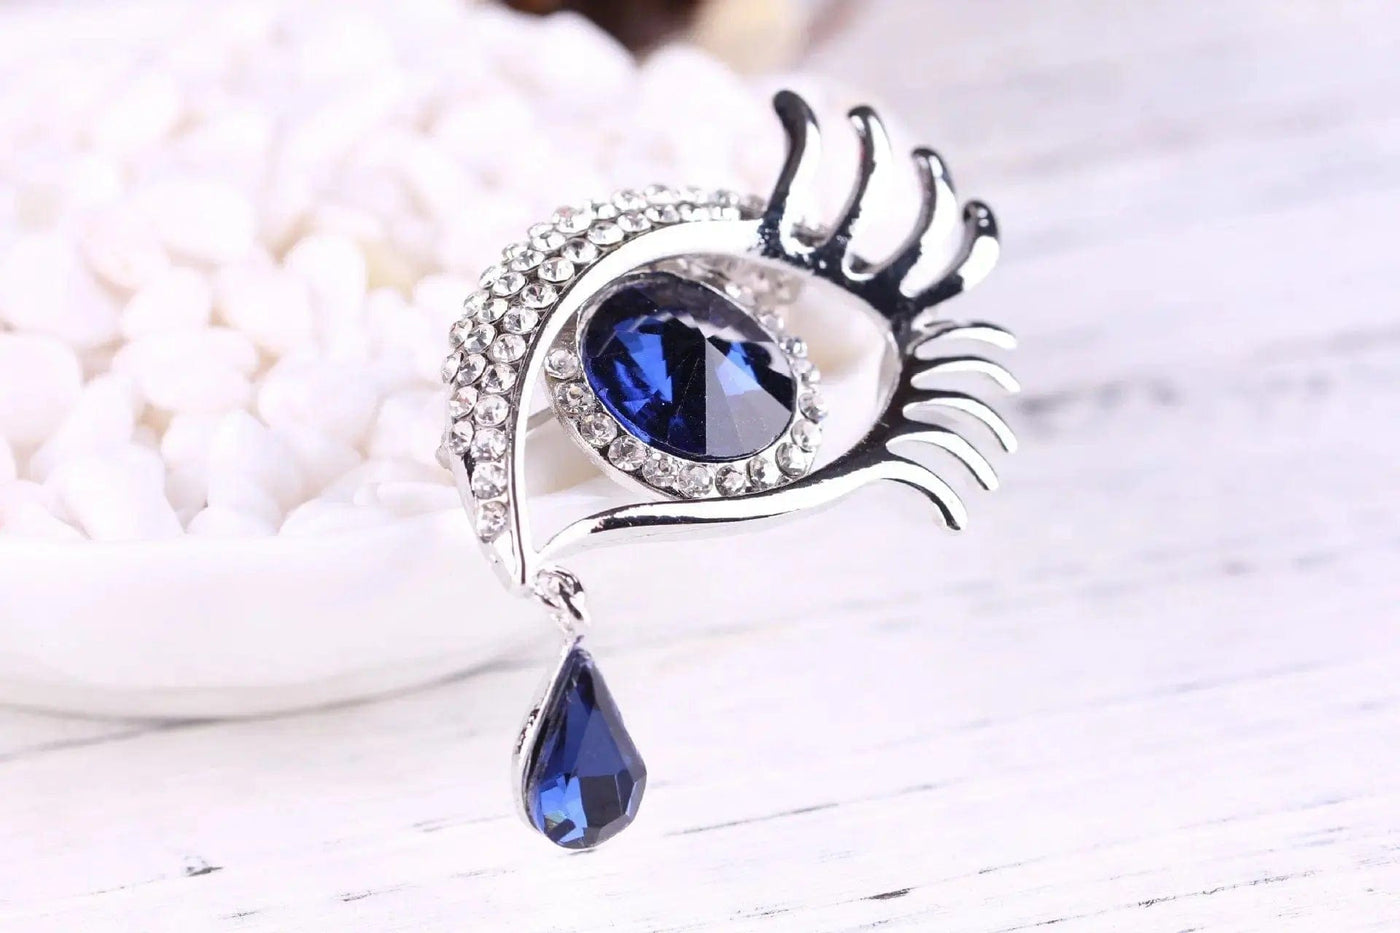 BROOCHITON Brooches silve and blue diamond-encrusted tear eye design brooch